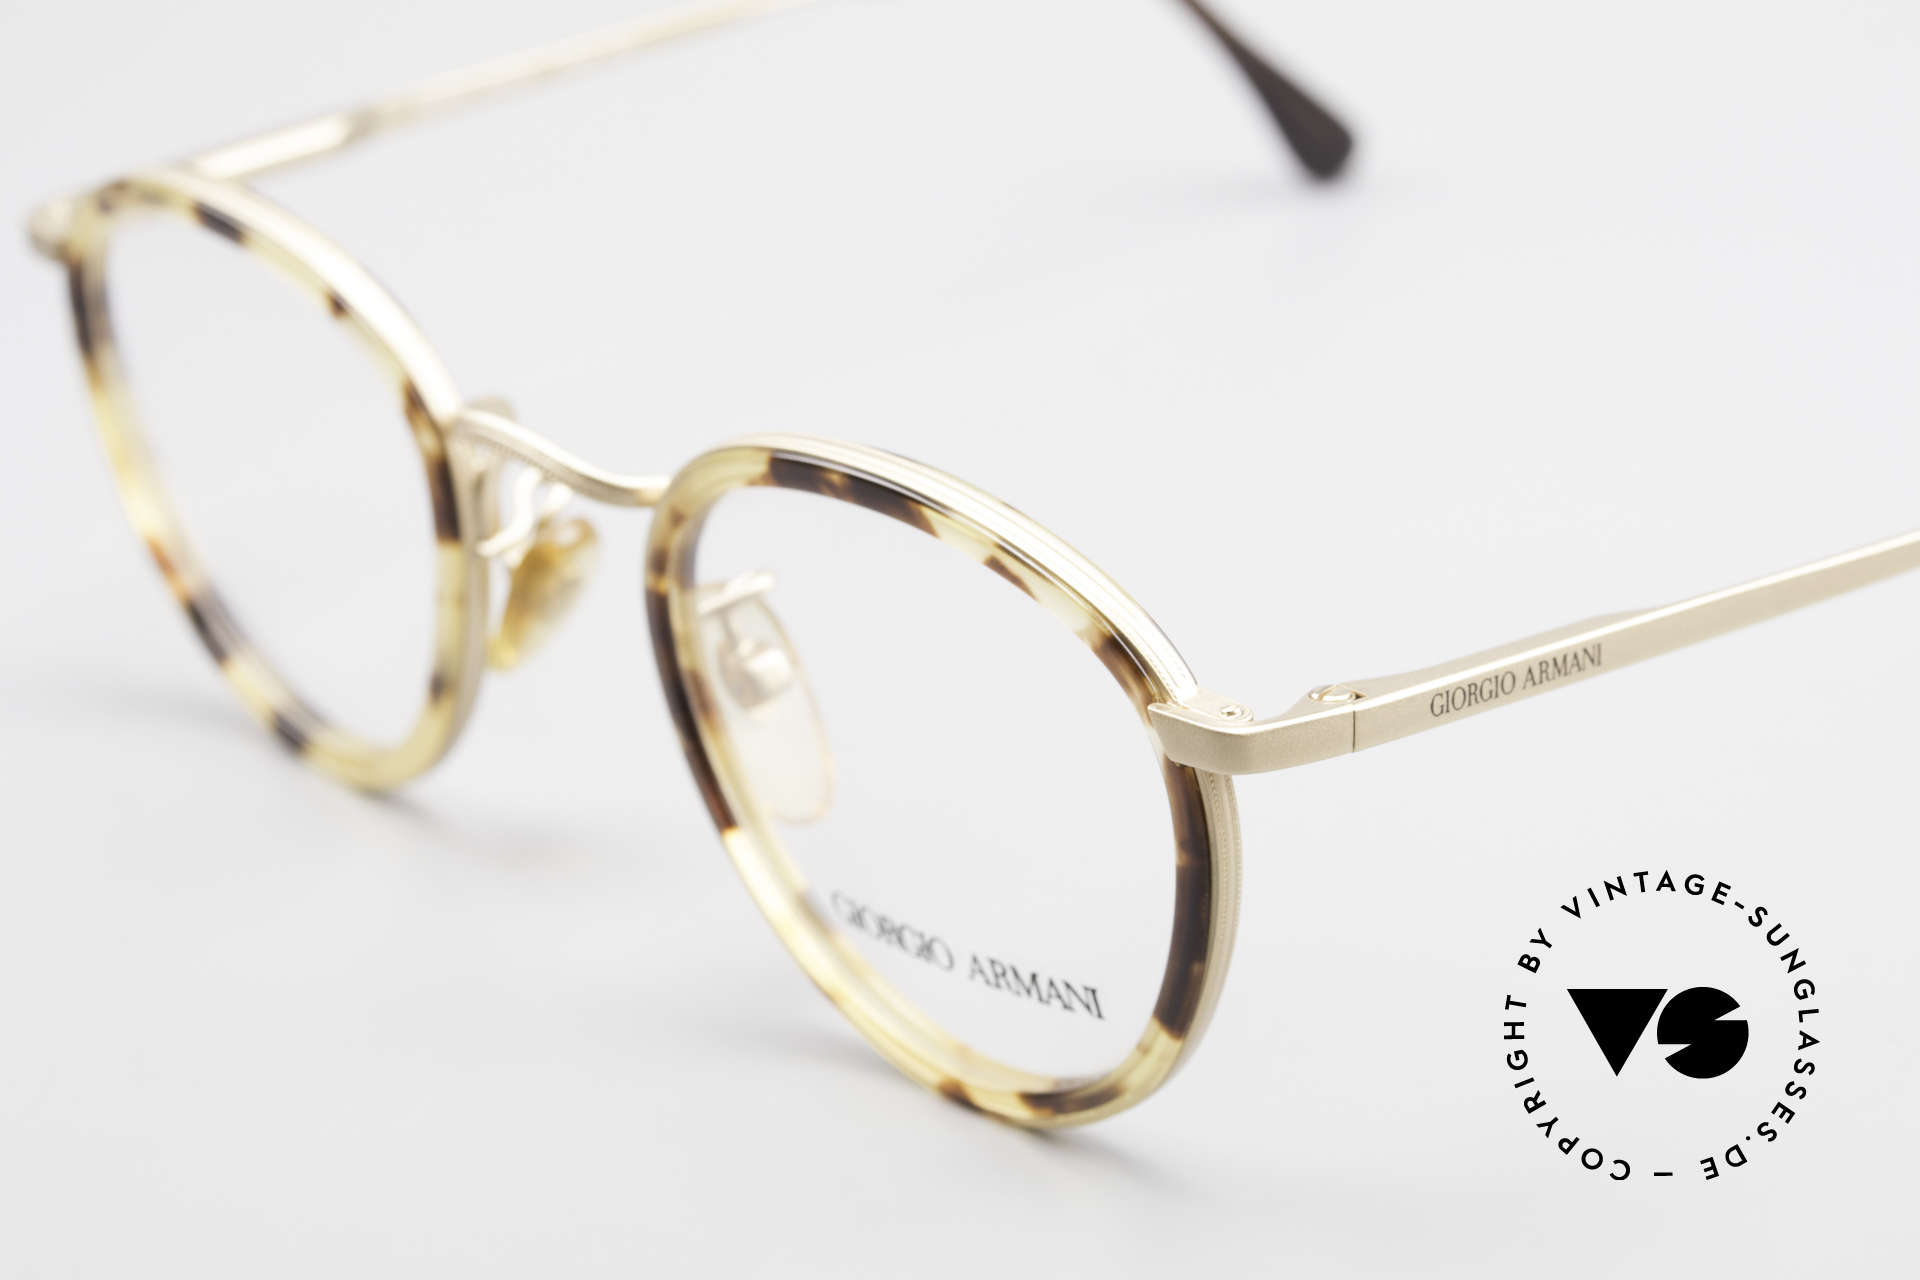 Giorgio Armani 159 Panto Glasses Windsor Rings, true 'gentlemen glasses' in tangible premium-quality, Made for Men